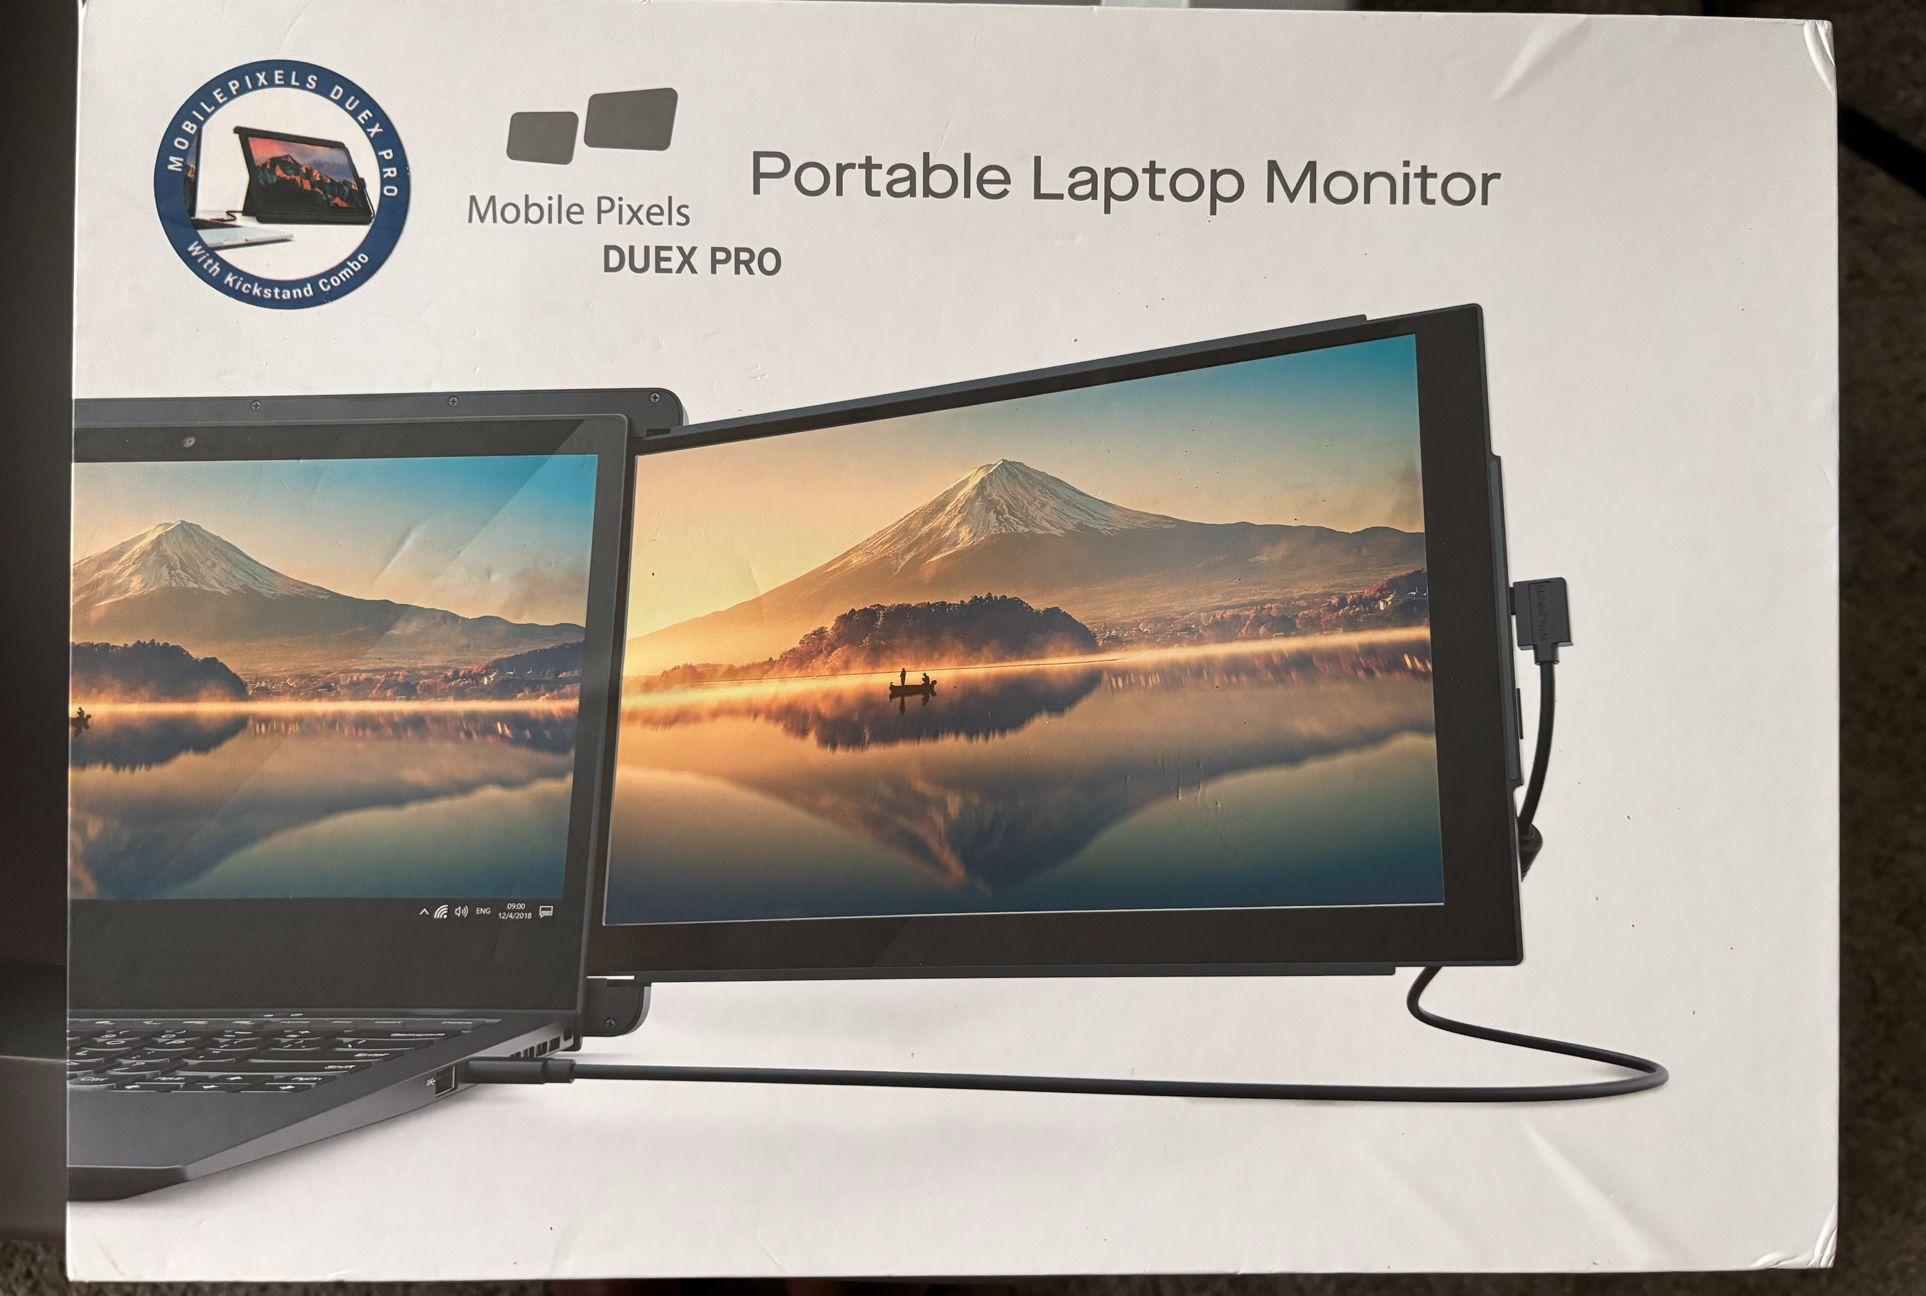 Mobile Pixels - Portable Laptop Monitor